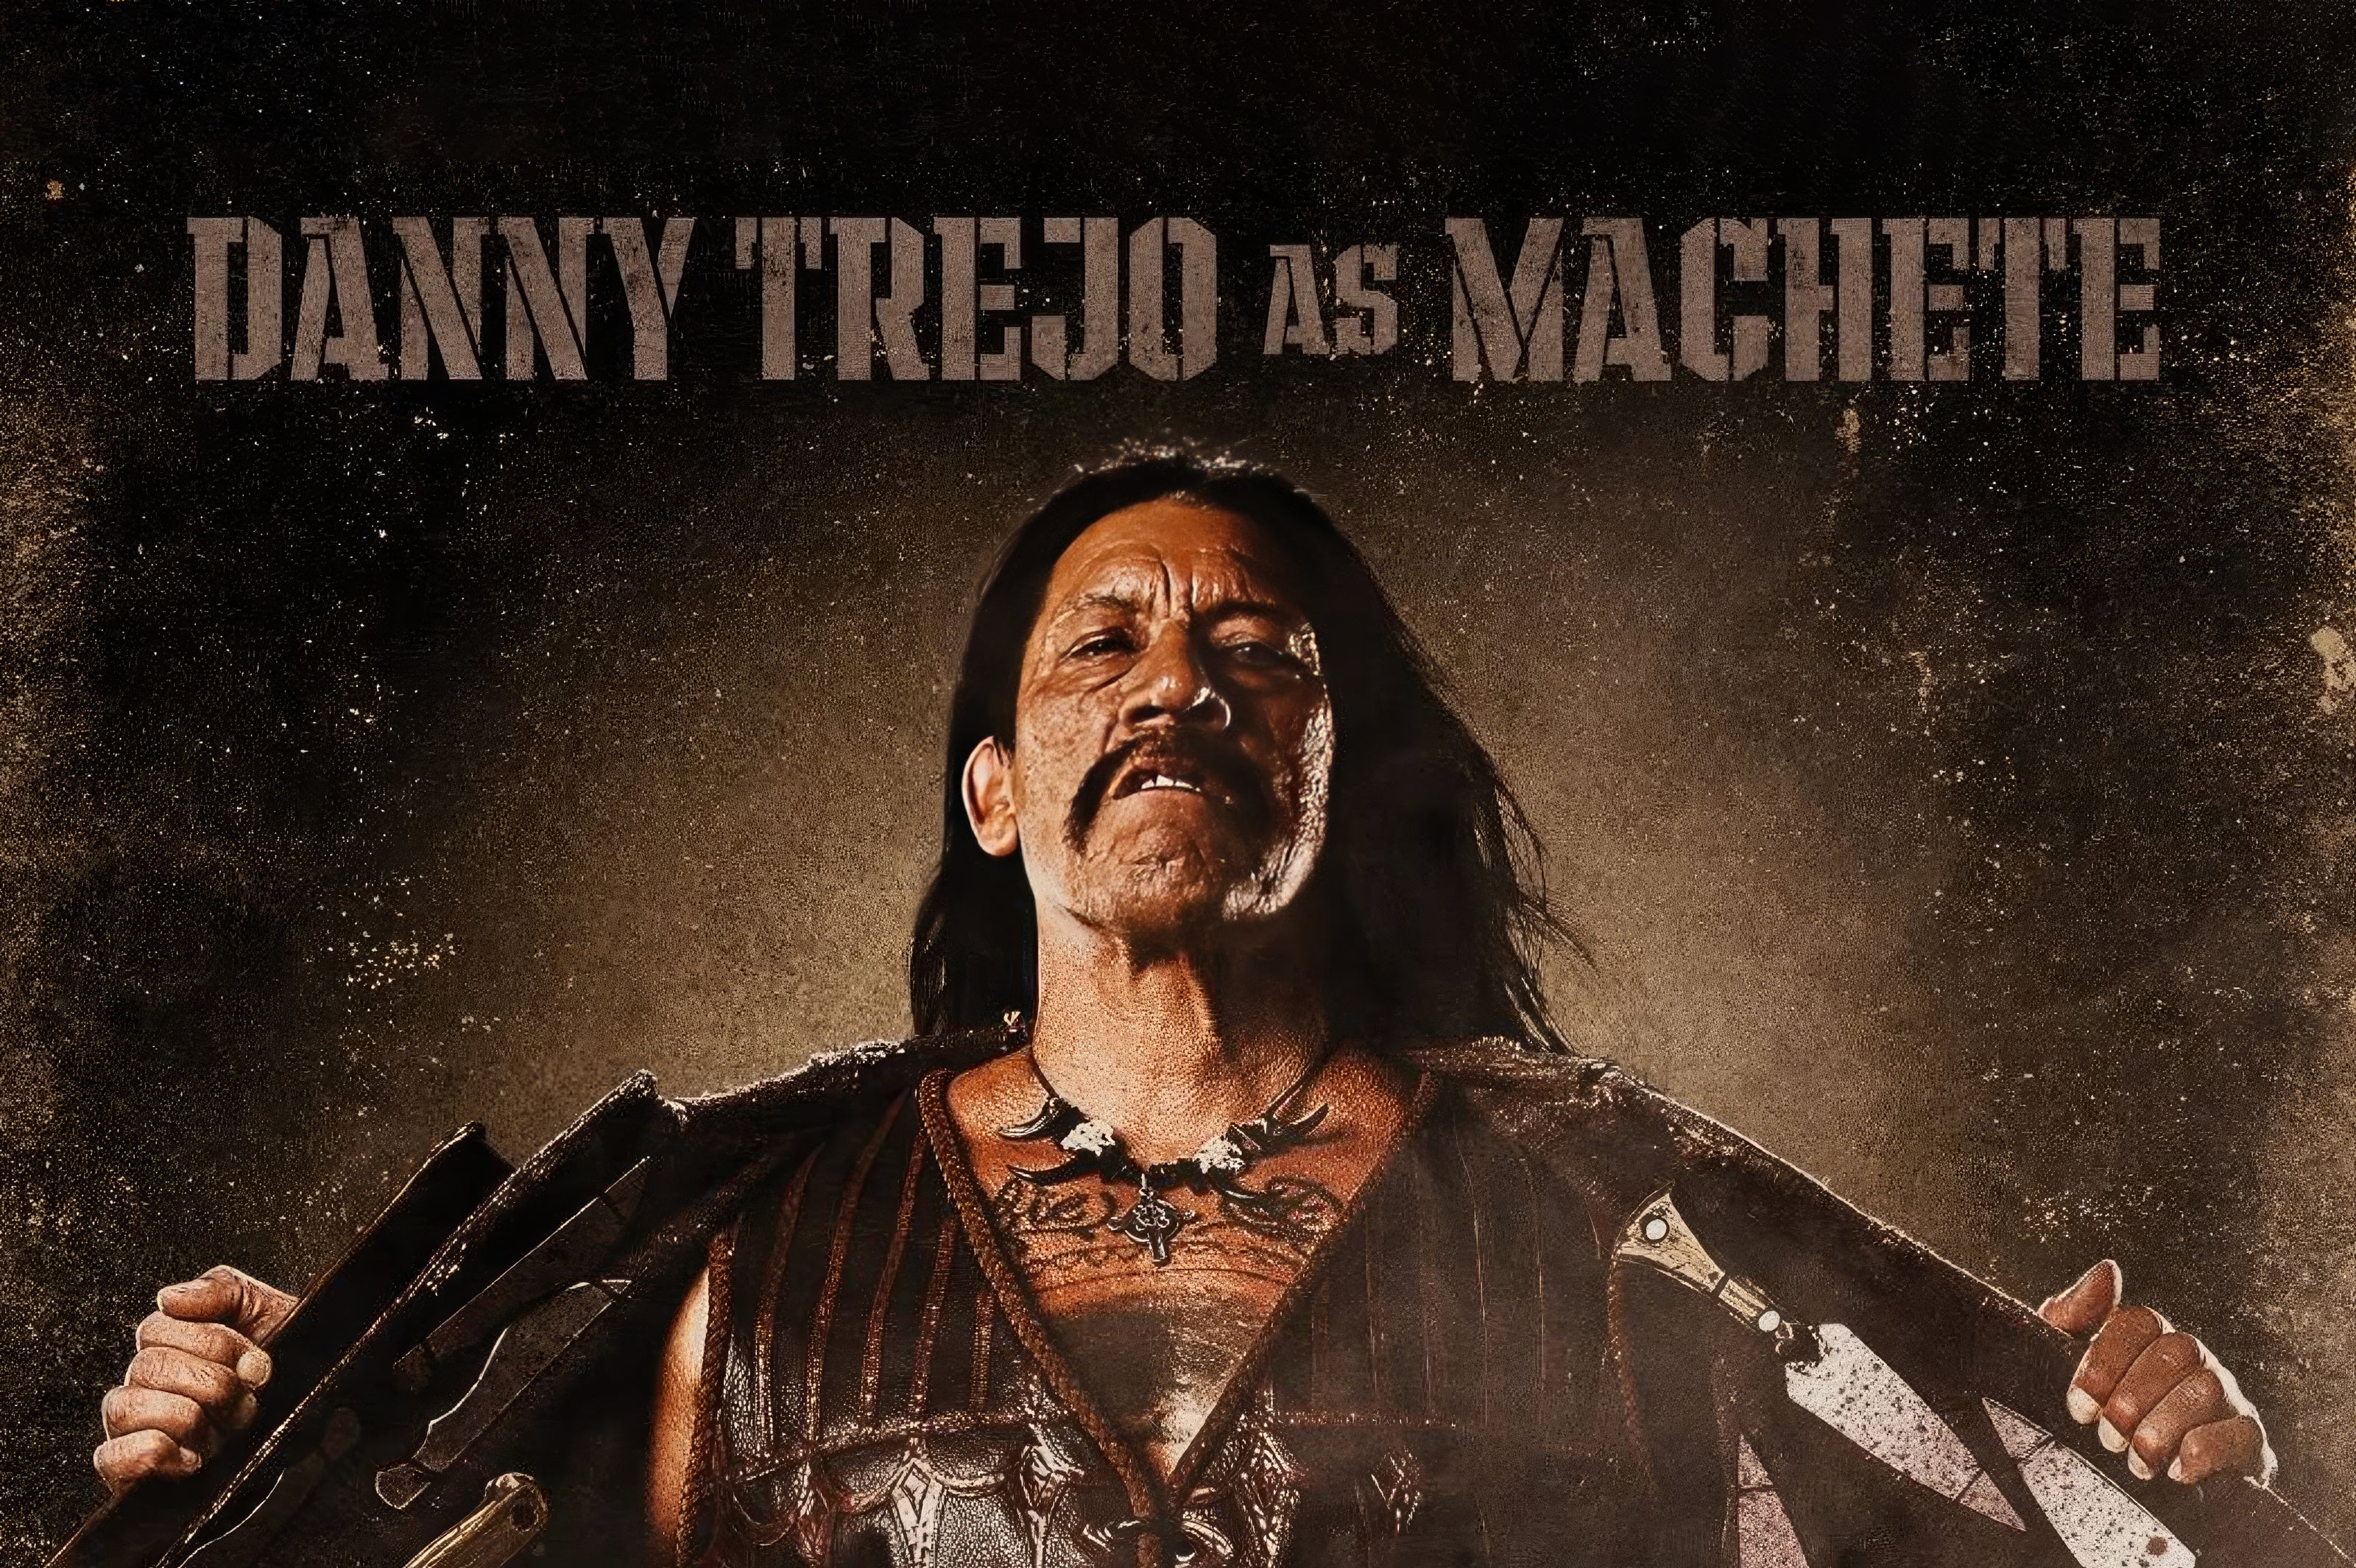 Machete Script Screenplay - Image of Danny Trejo as Machete